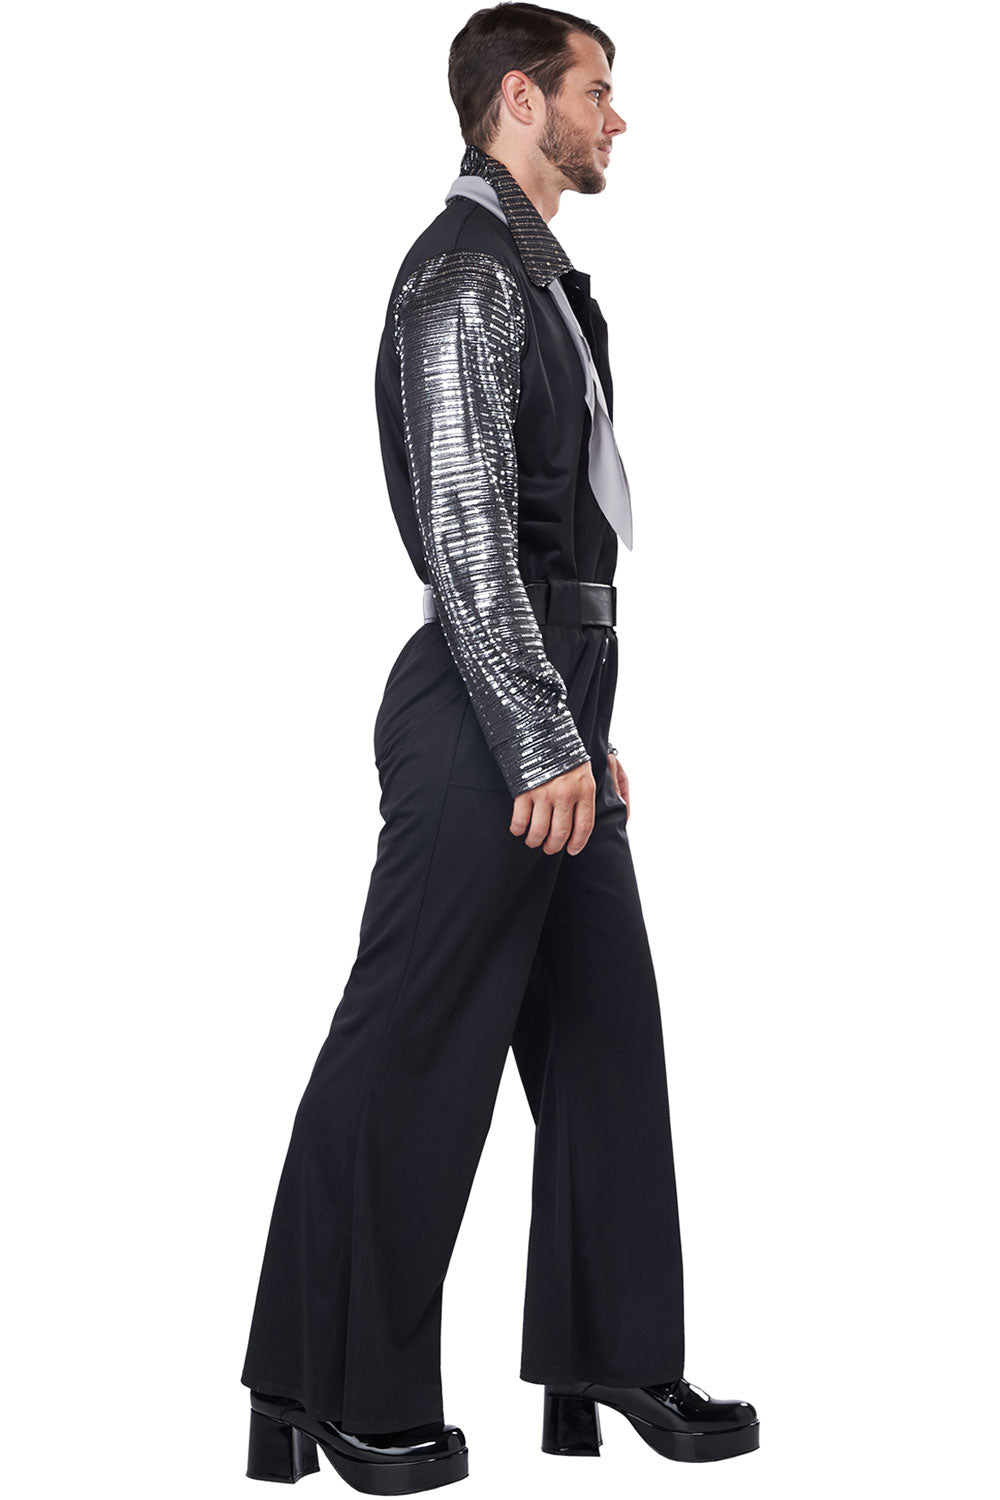 Flashy 70's Style Jumpsuit / Adult California Costume 5120/074